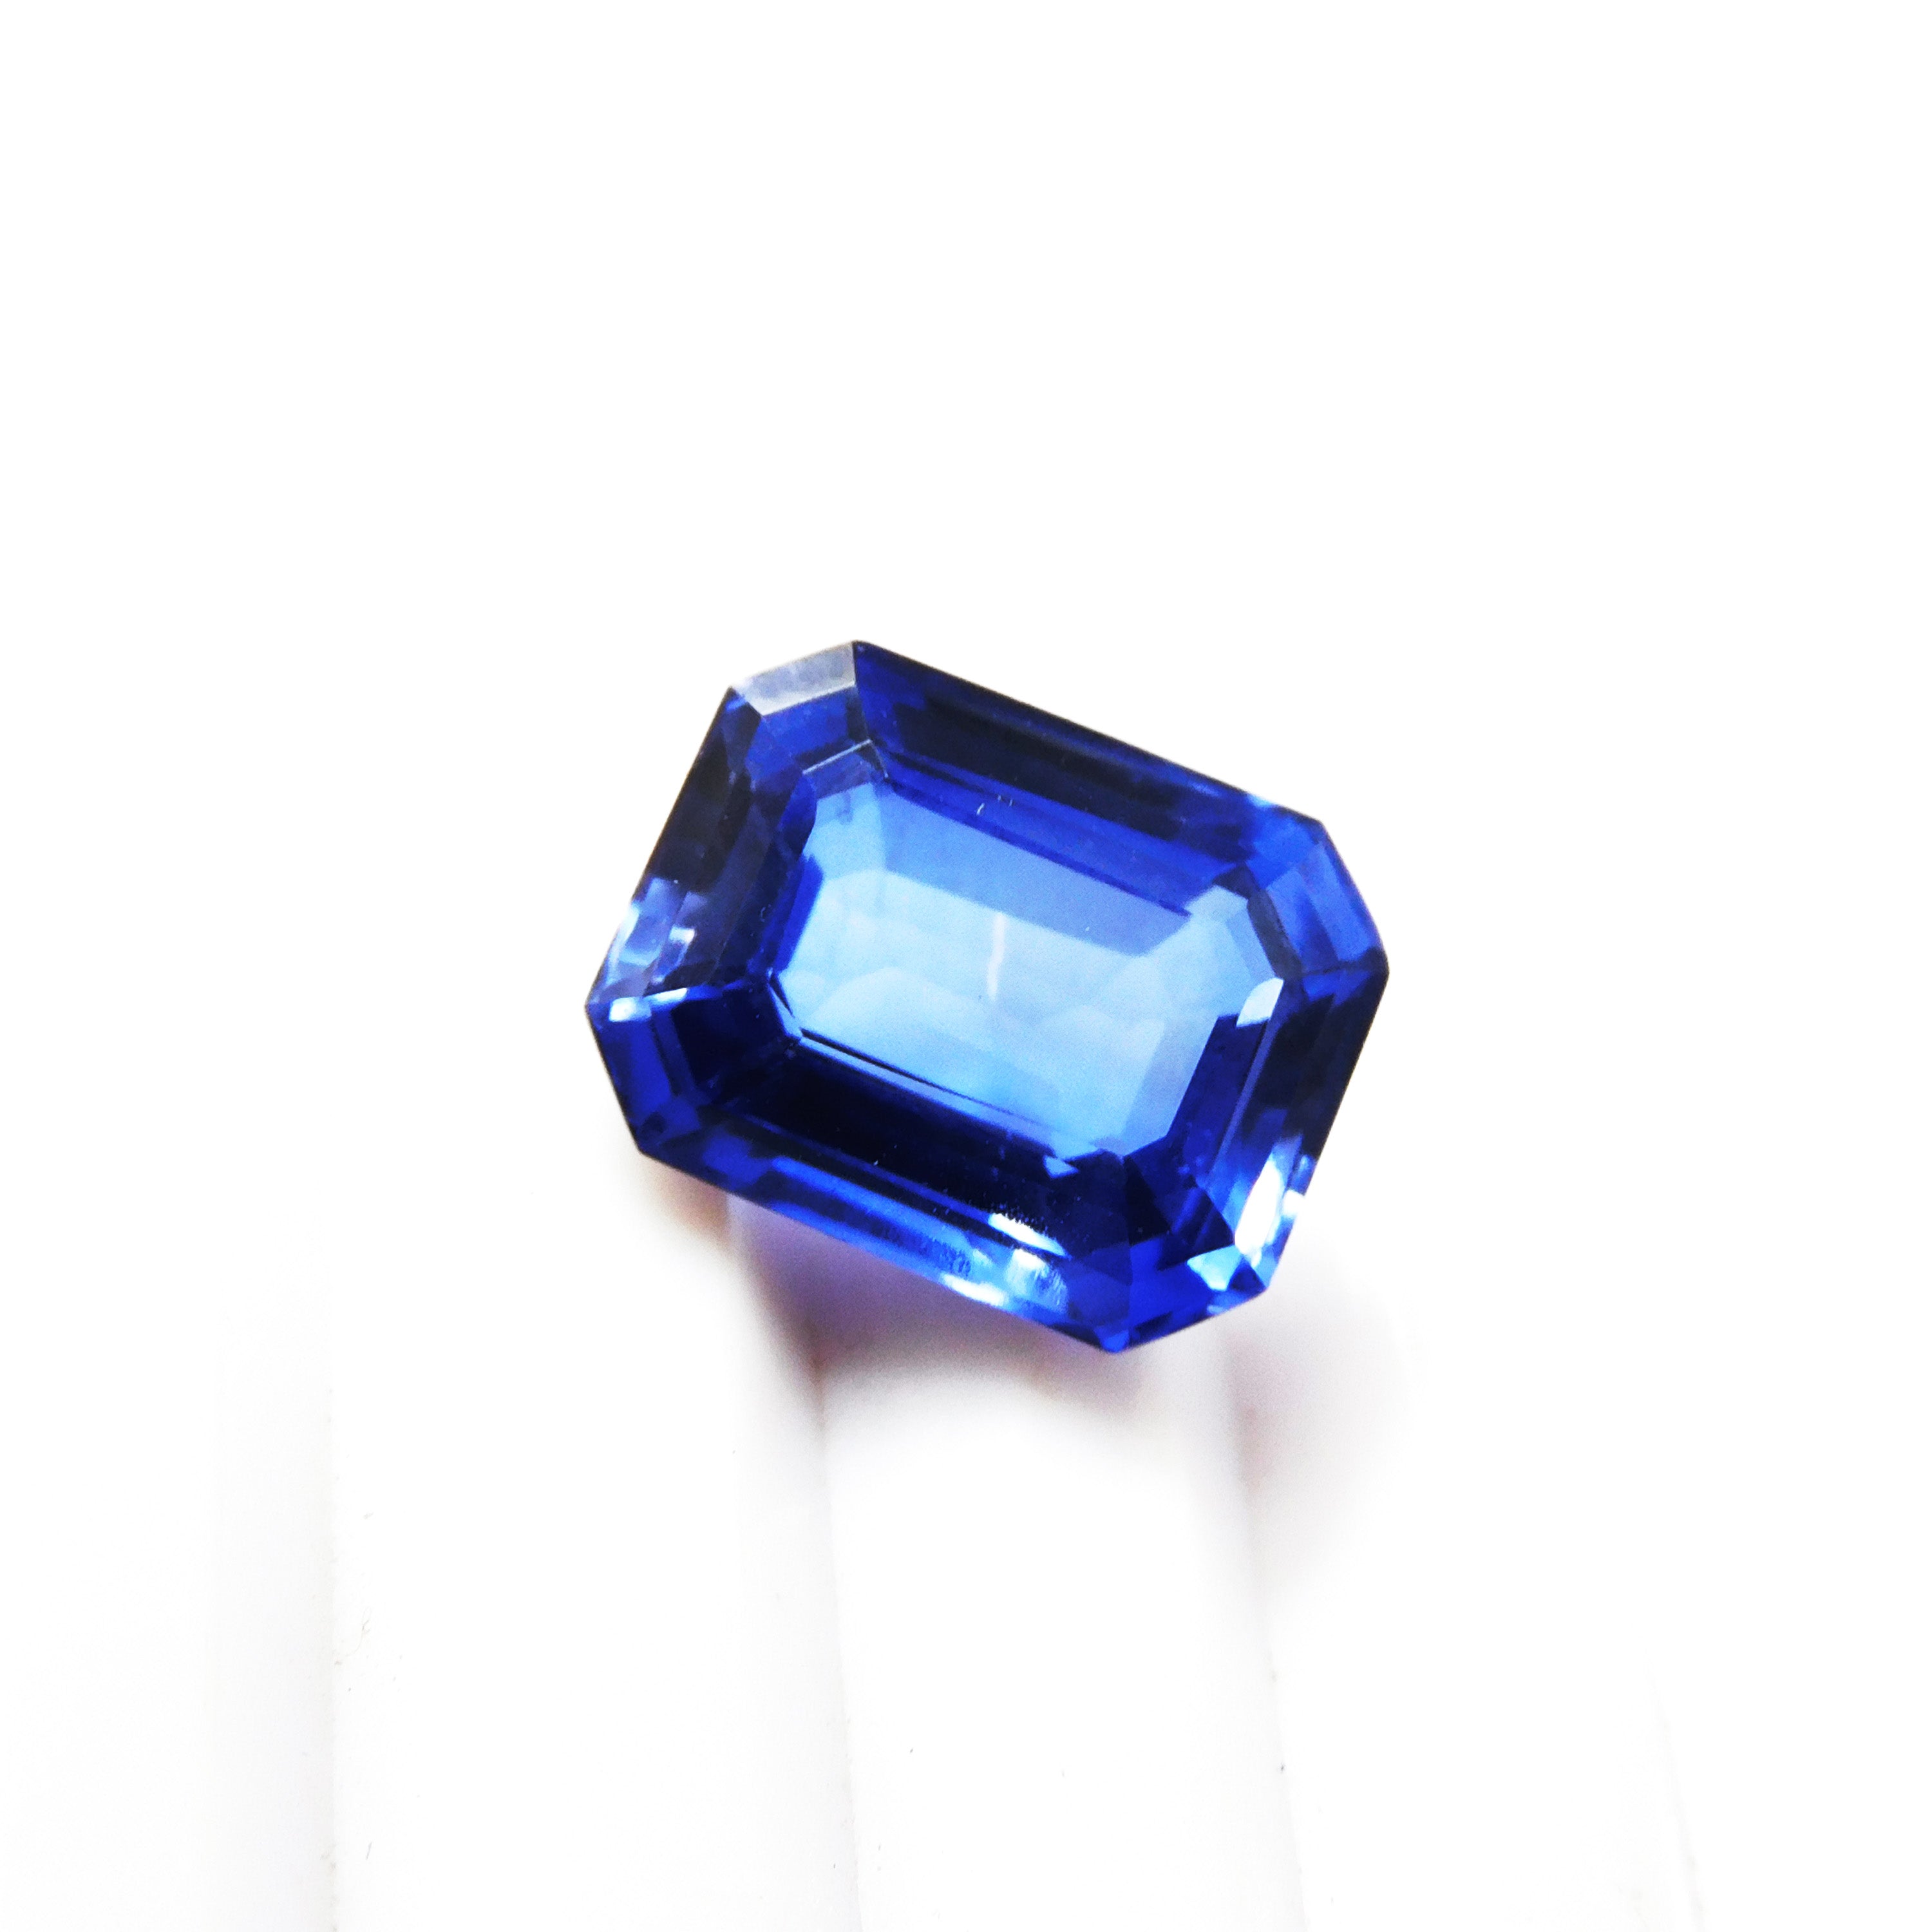 For Beautiful Jwelery 9.78 Carat Natural Blue Tanzanite Emerald Cut Certified Loose Gemstone | TANZANITE- Metaphysical Properties & Spiritual Protection